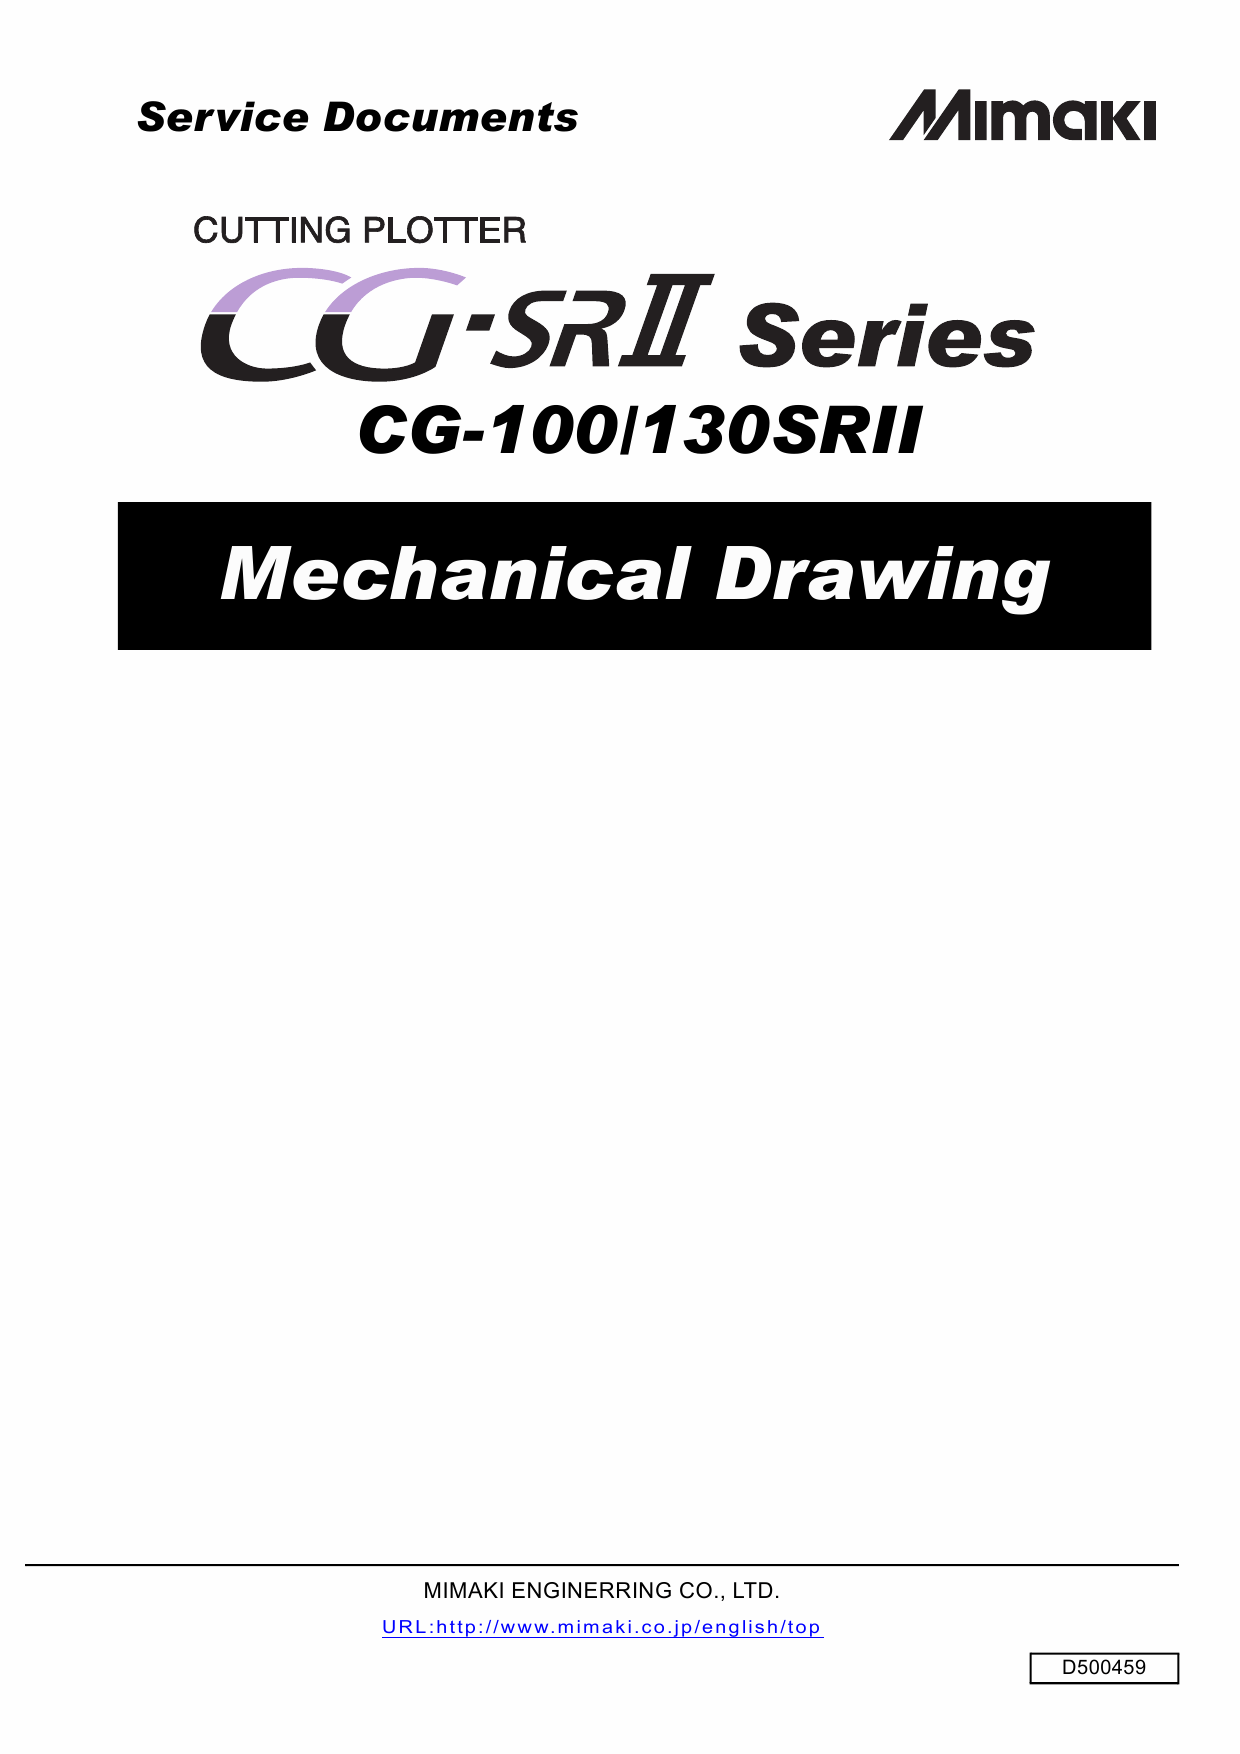 MIMAKI CG SRII 100 130 MECHANICAL DRAWING Parts Manual-1